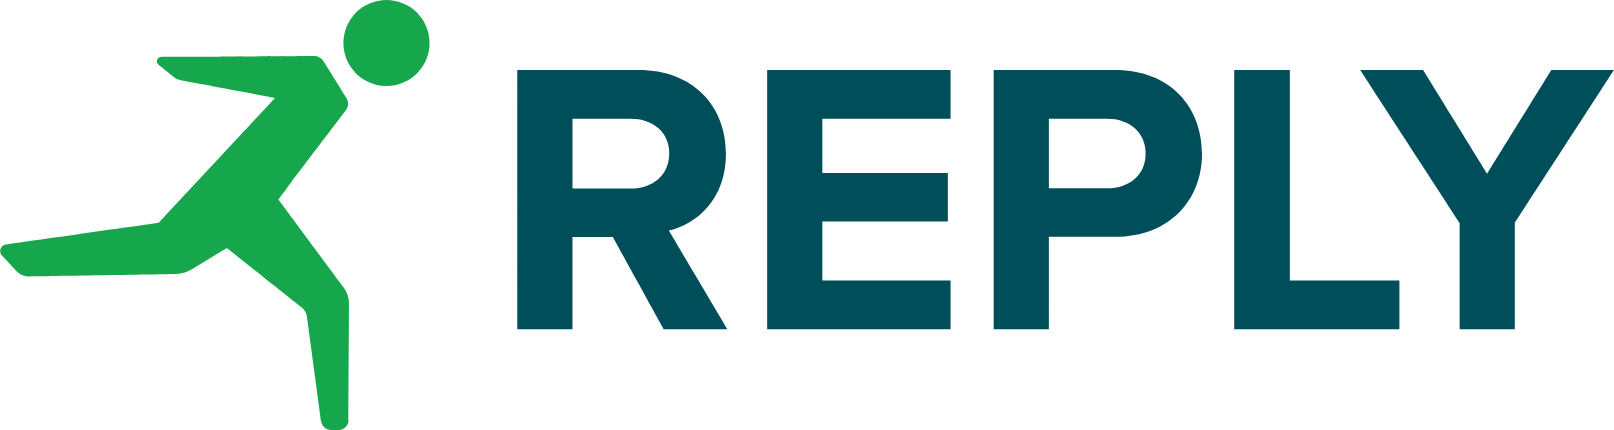 Reply logo large (transparent PNG)